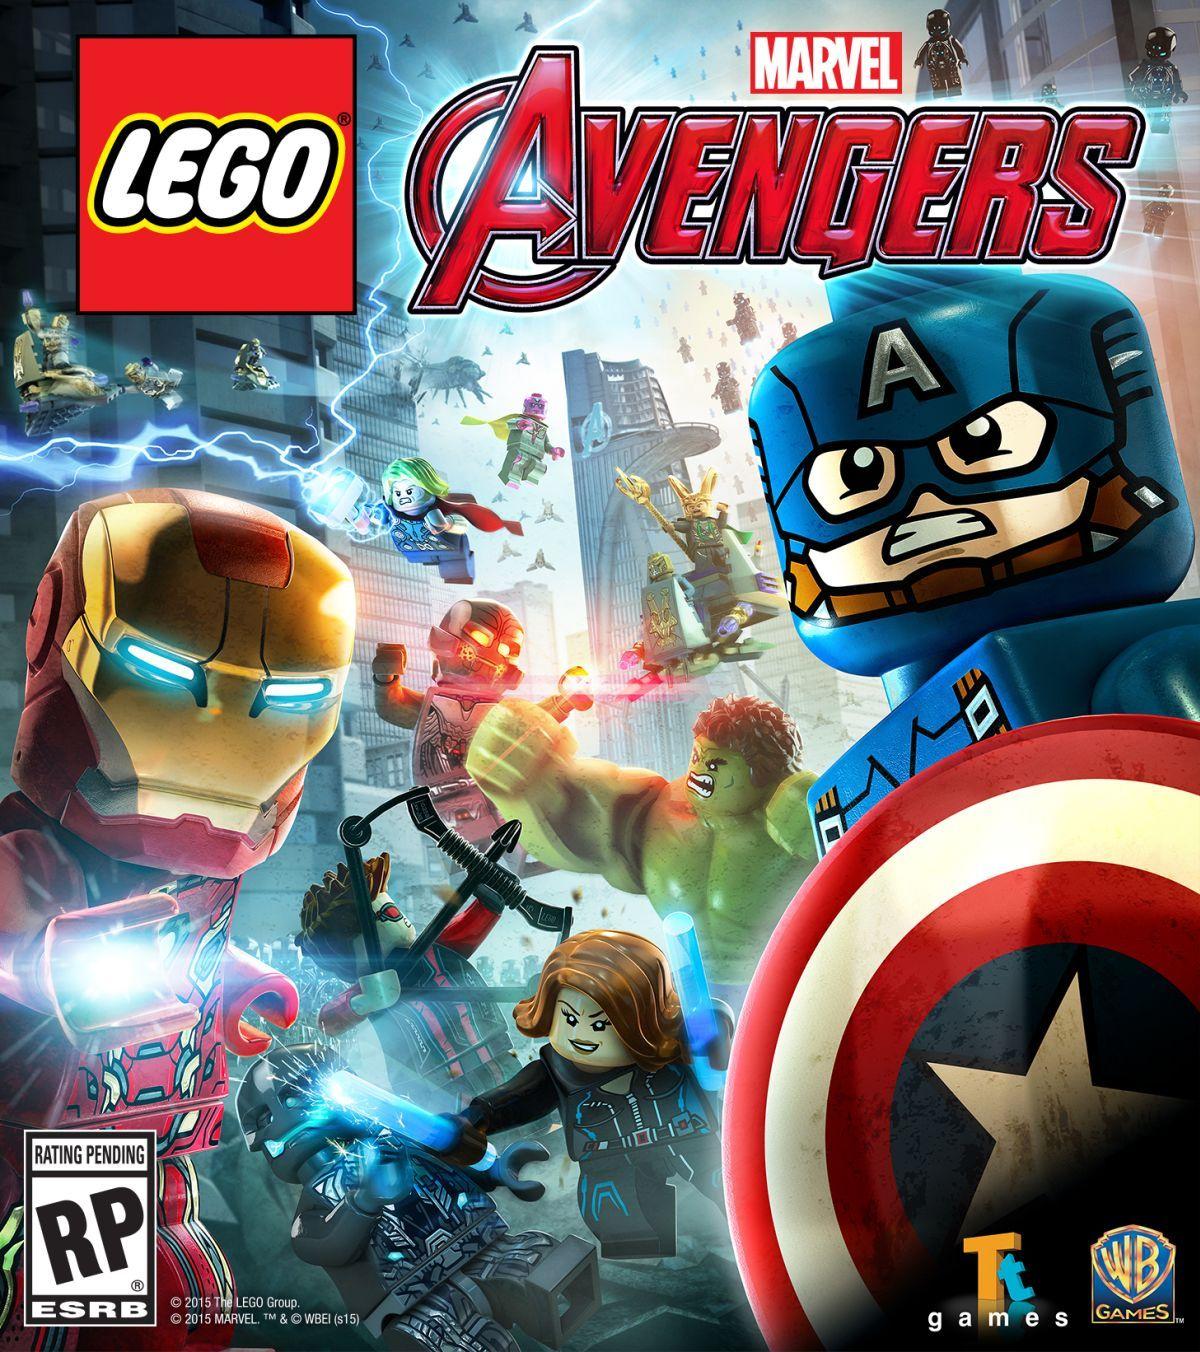 LEGO Marvel's Avengers (PS3). post post modern dad